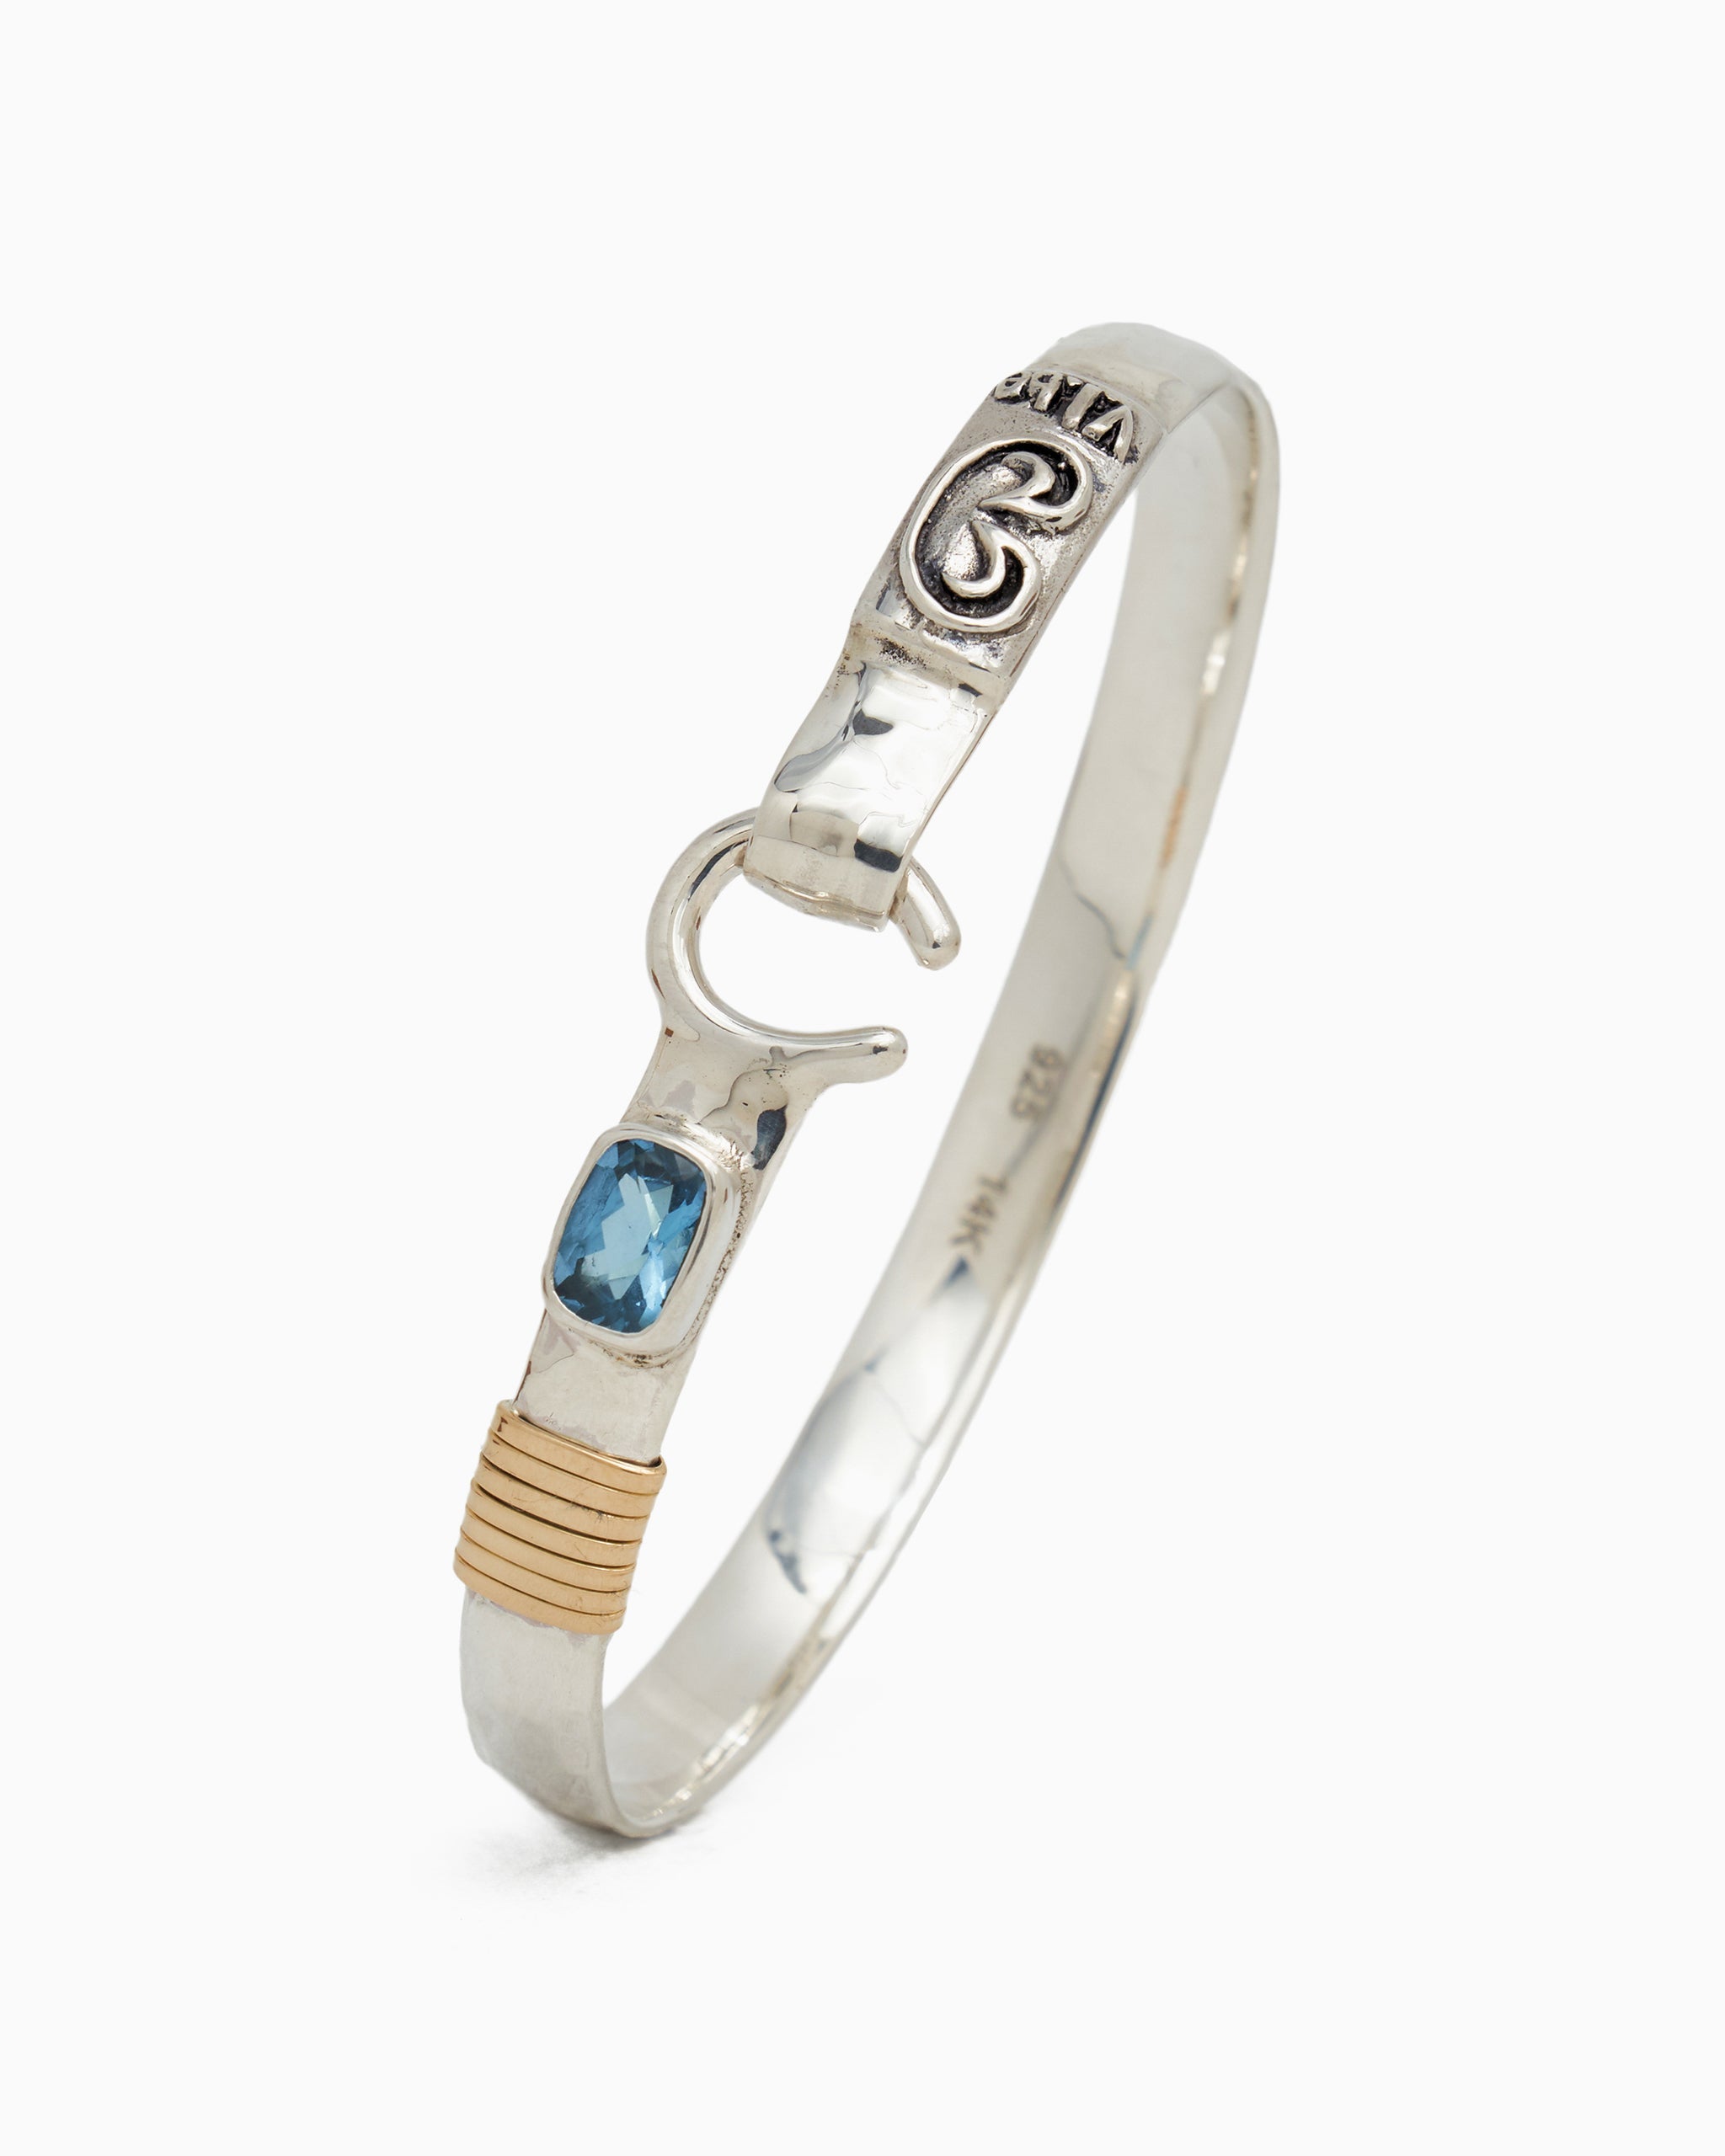 The Hook Bracelet with Stone, 6mm - Hampton Blue Topaz - Vibe Jewelry